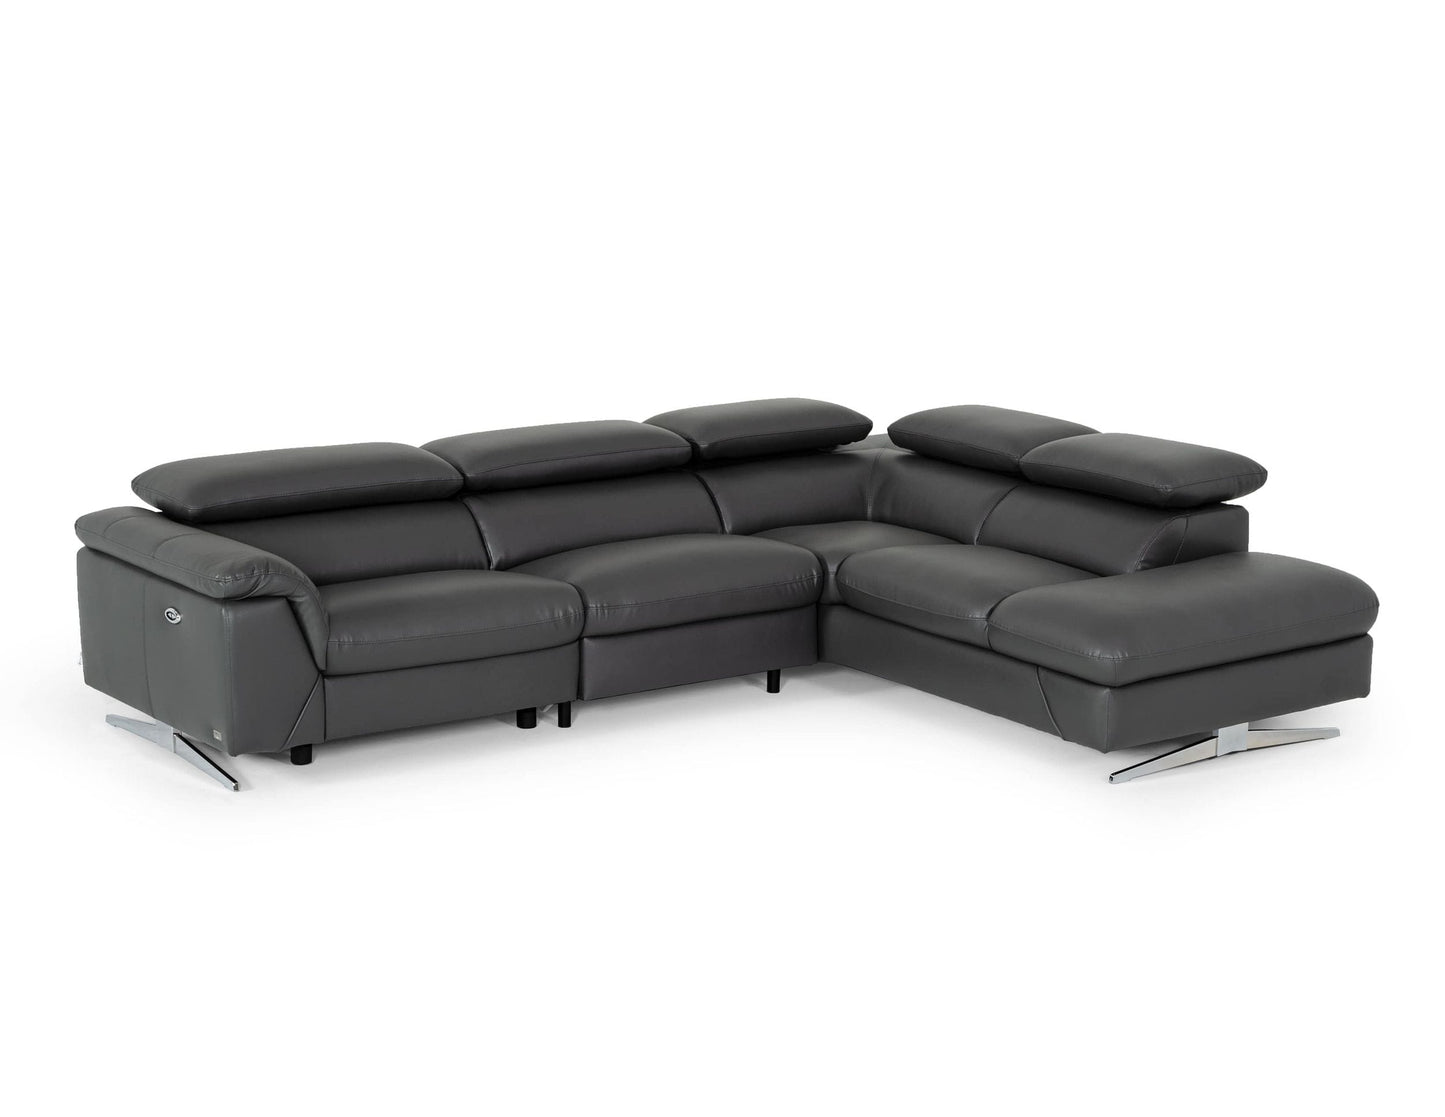 VIG Furniture Divani Casa Maine Grey Leather Right Sectional Sofa Recliner